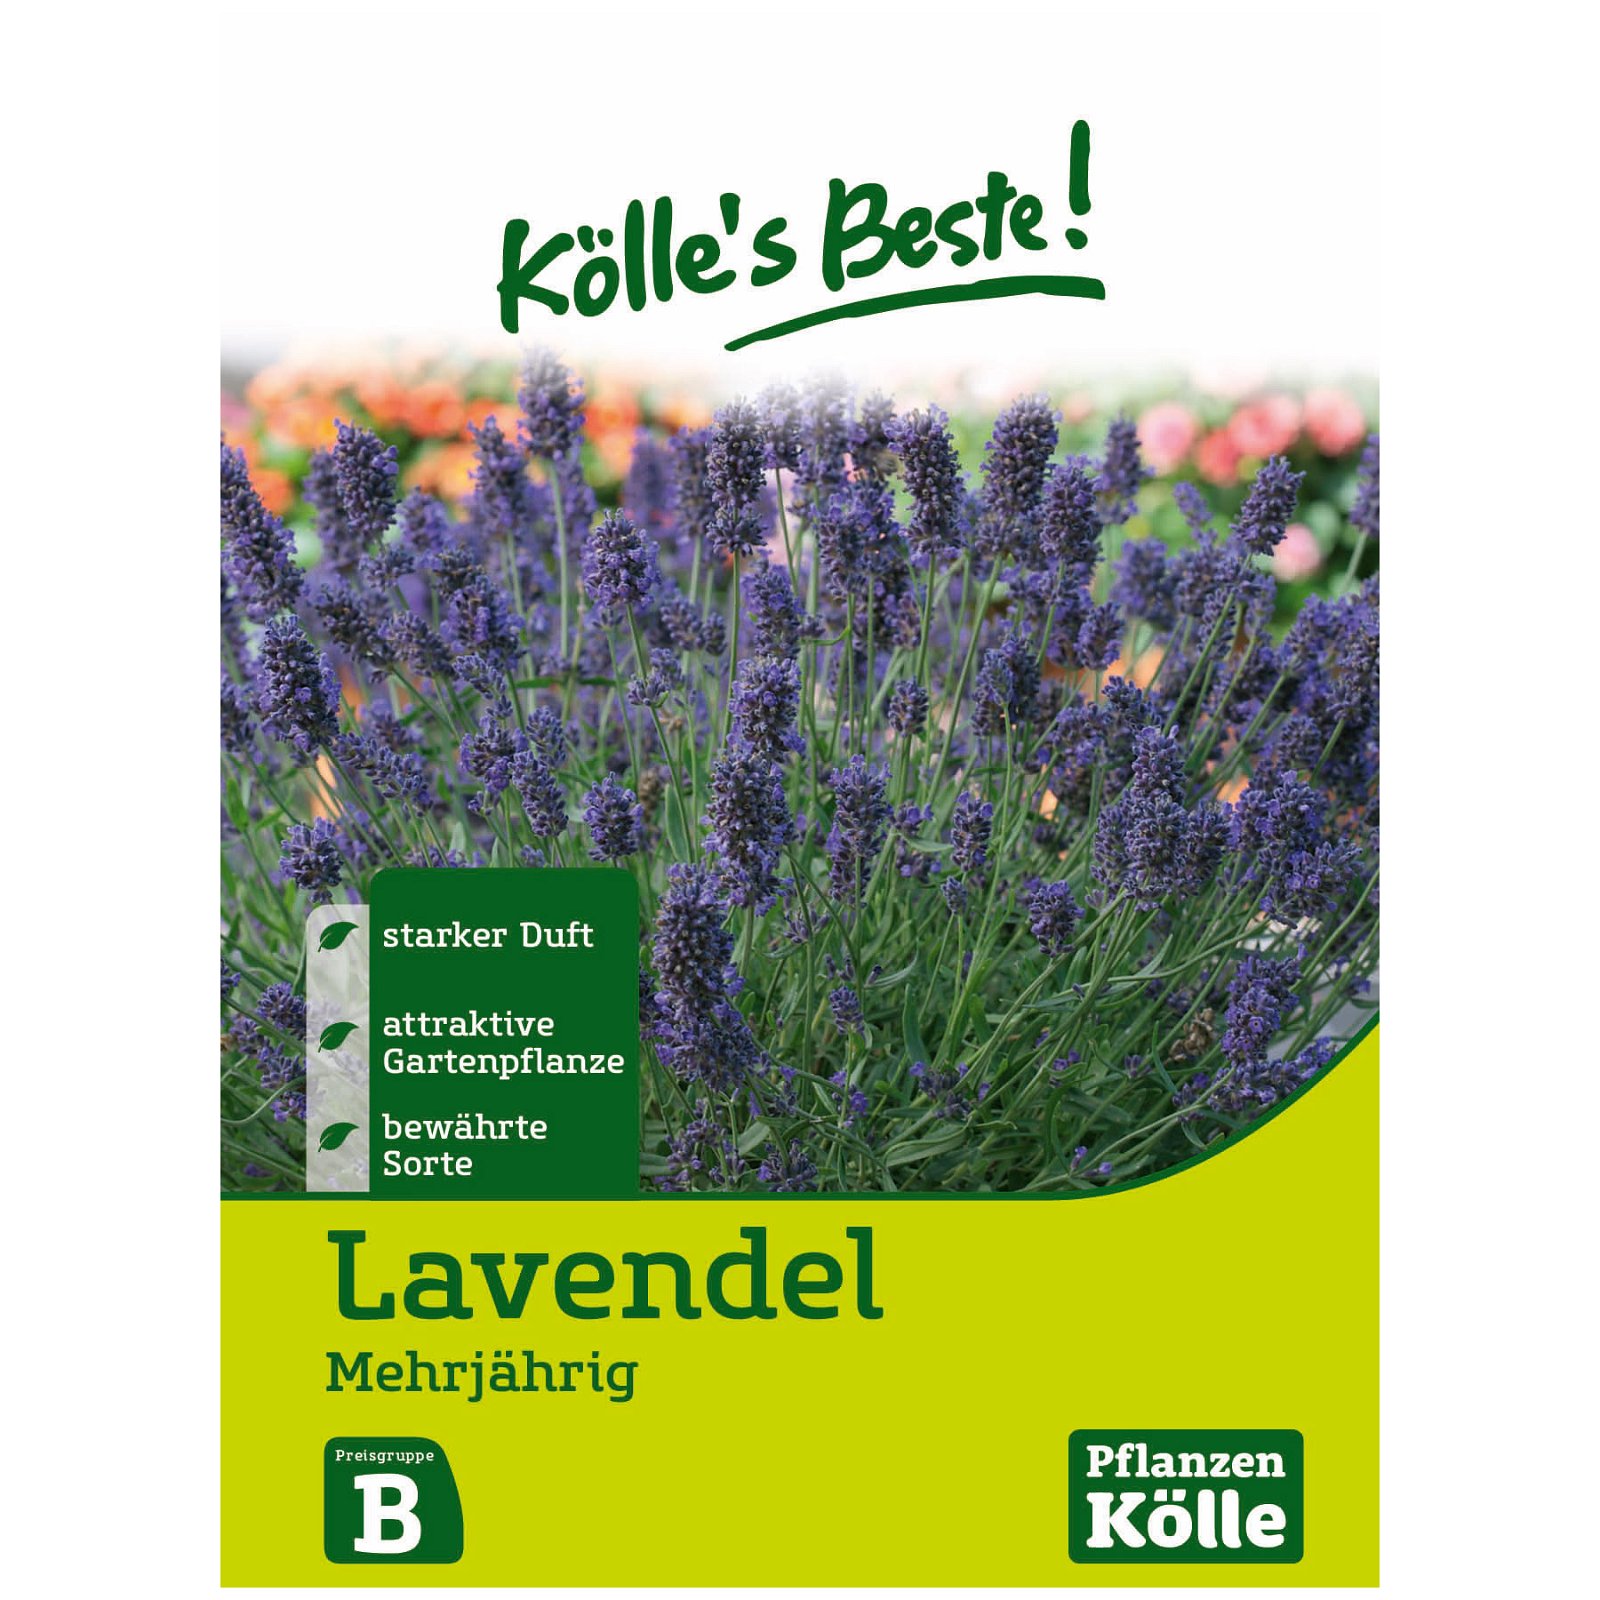 Kölle's Beste Lavendel mehrjährig, 6,25 g